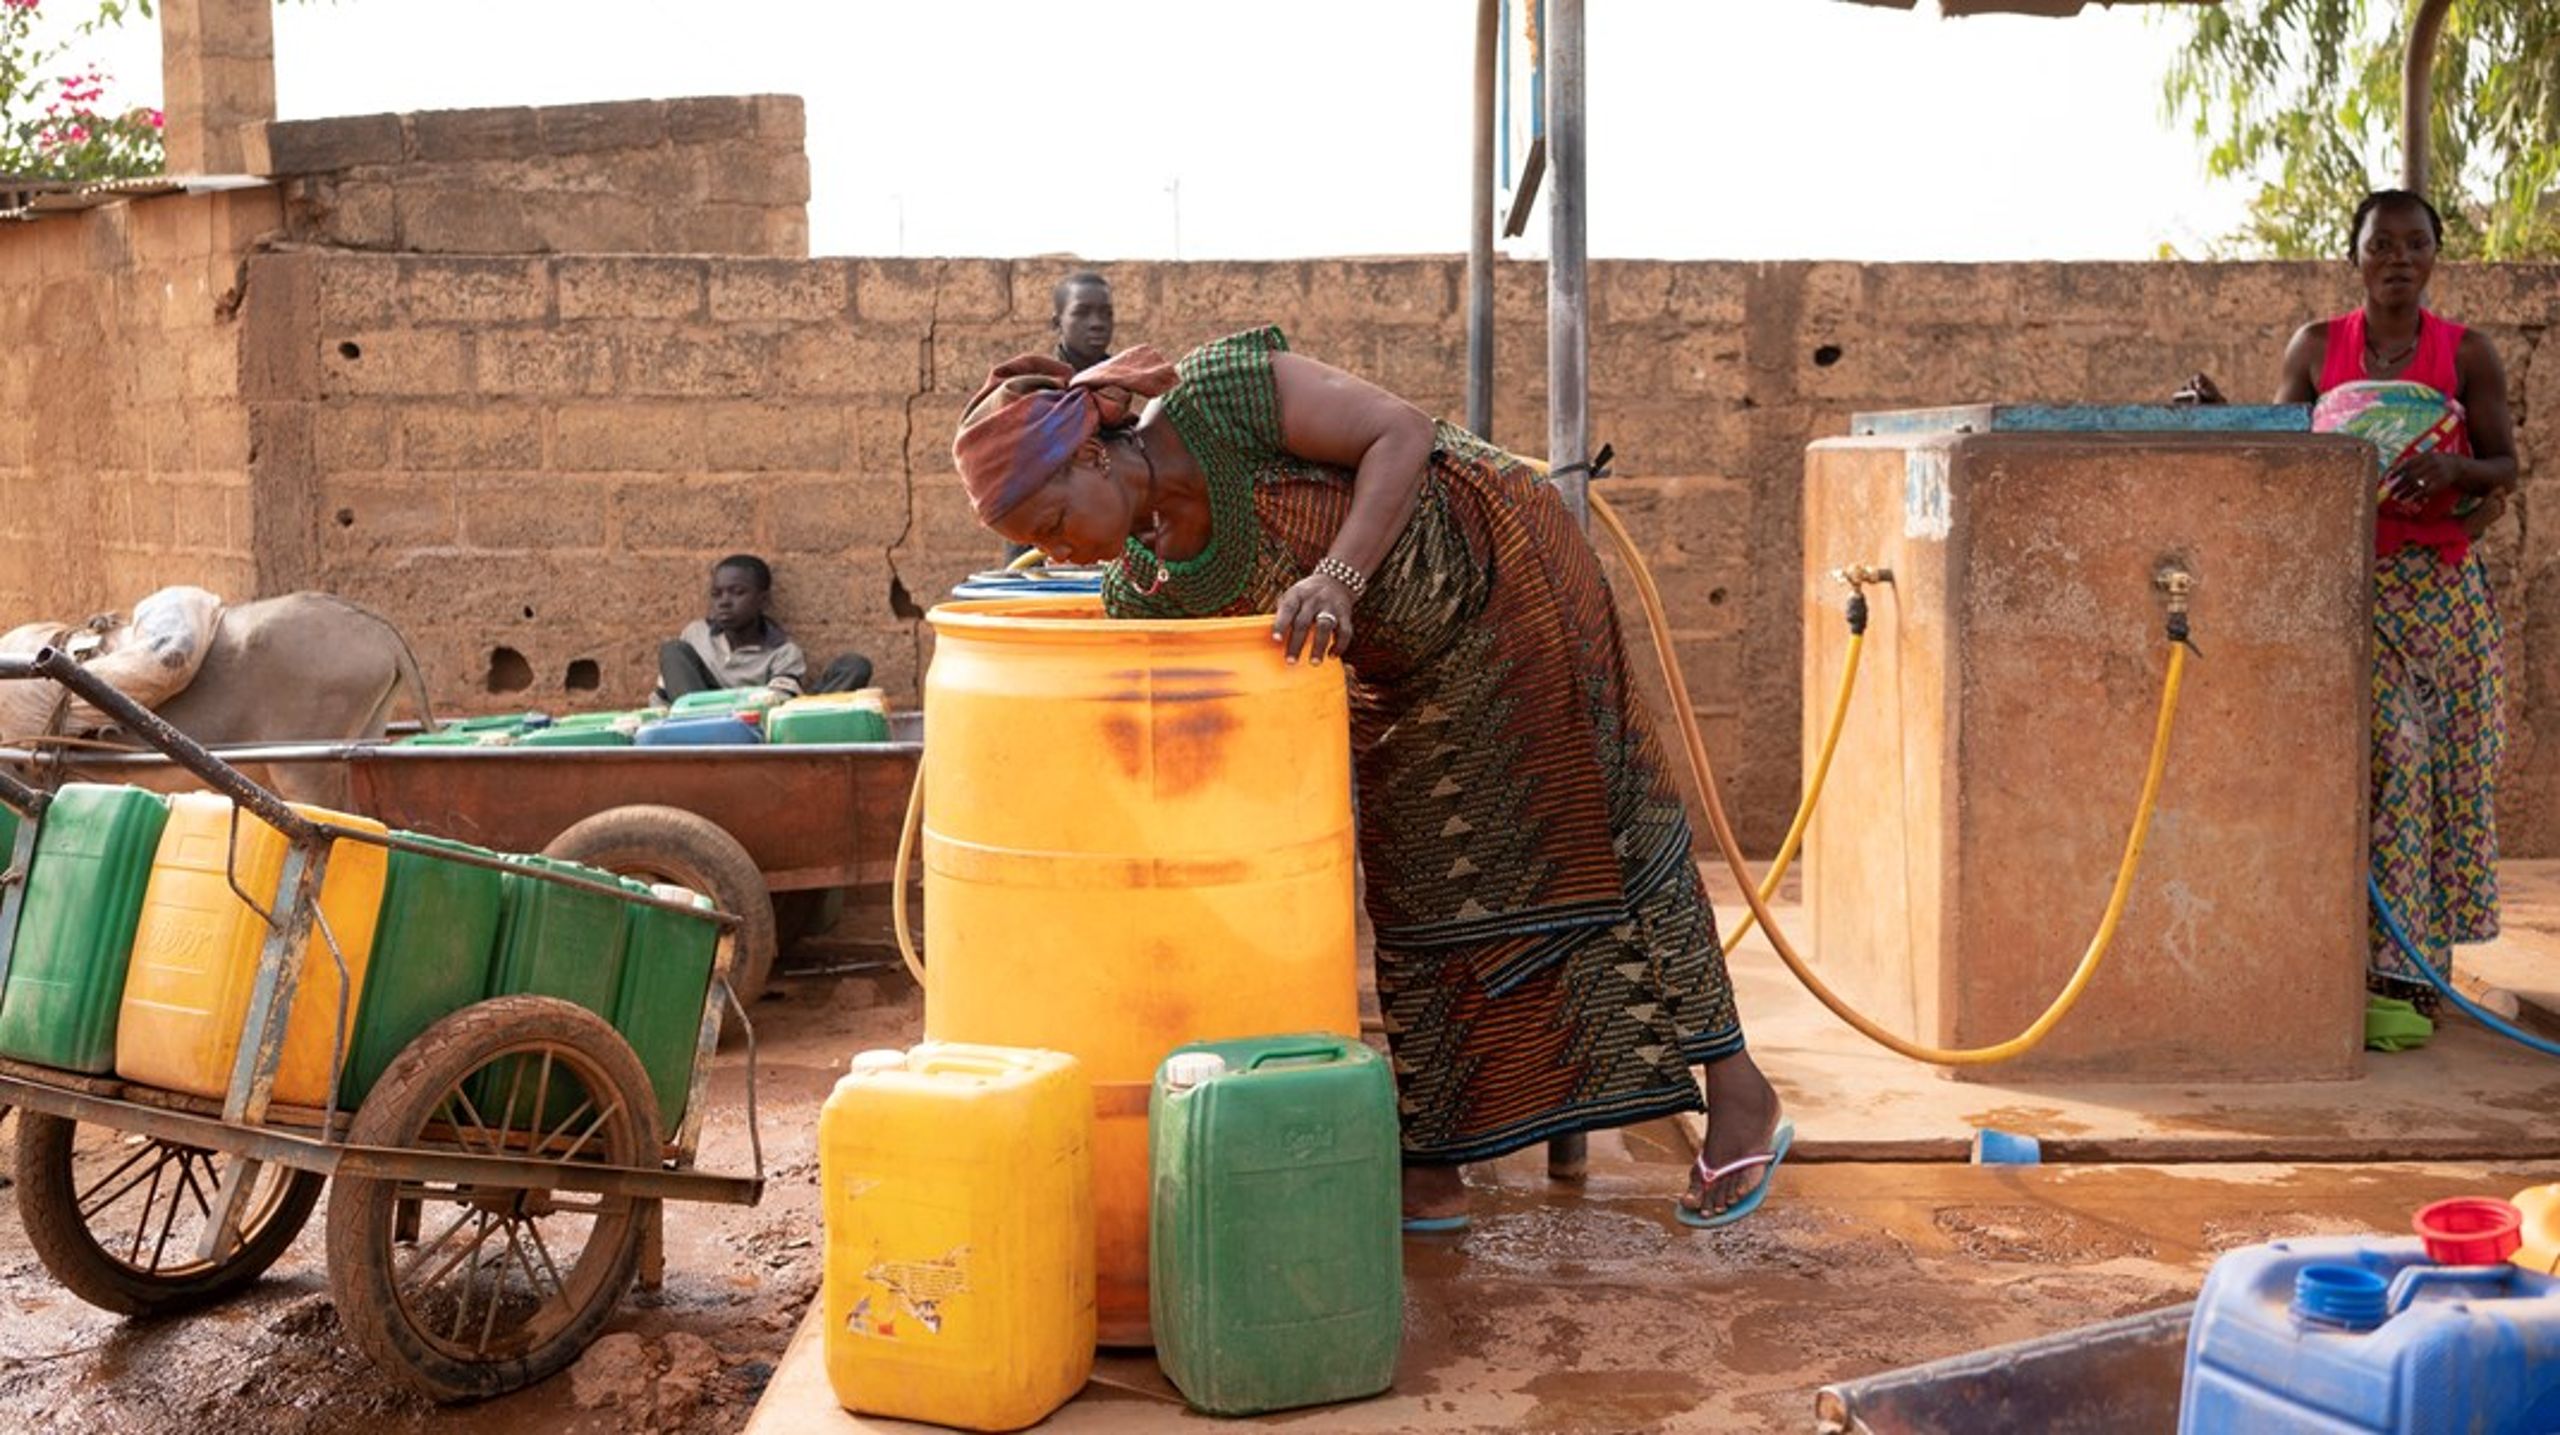 Danmark er blandt de ti største bilaterale donerer til Mali, Niger og Burkina Faso. Støtten&nbsp;går blandt andet til vandforsyninger og sanitet, skriver Jeppe Kofod og Flemming Møller Mortensen.